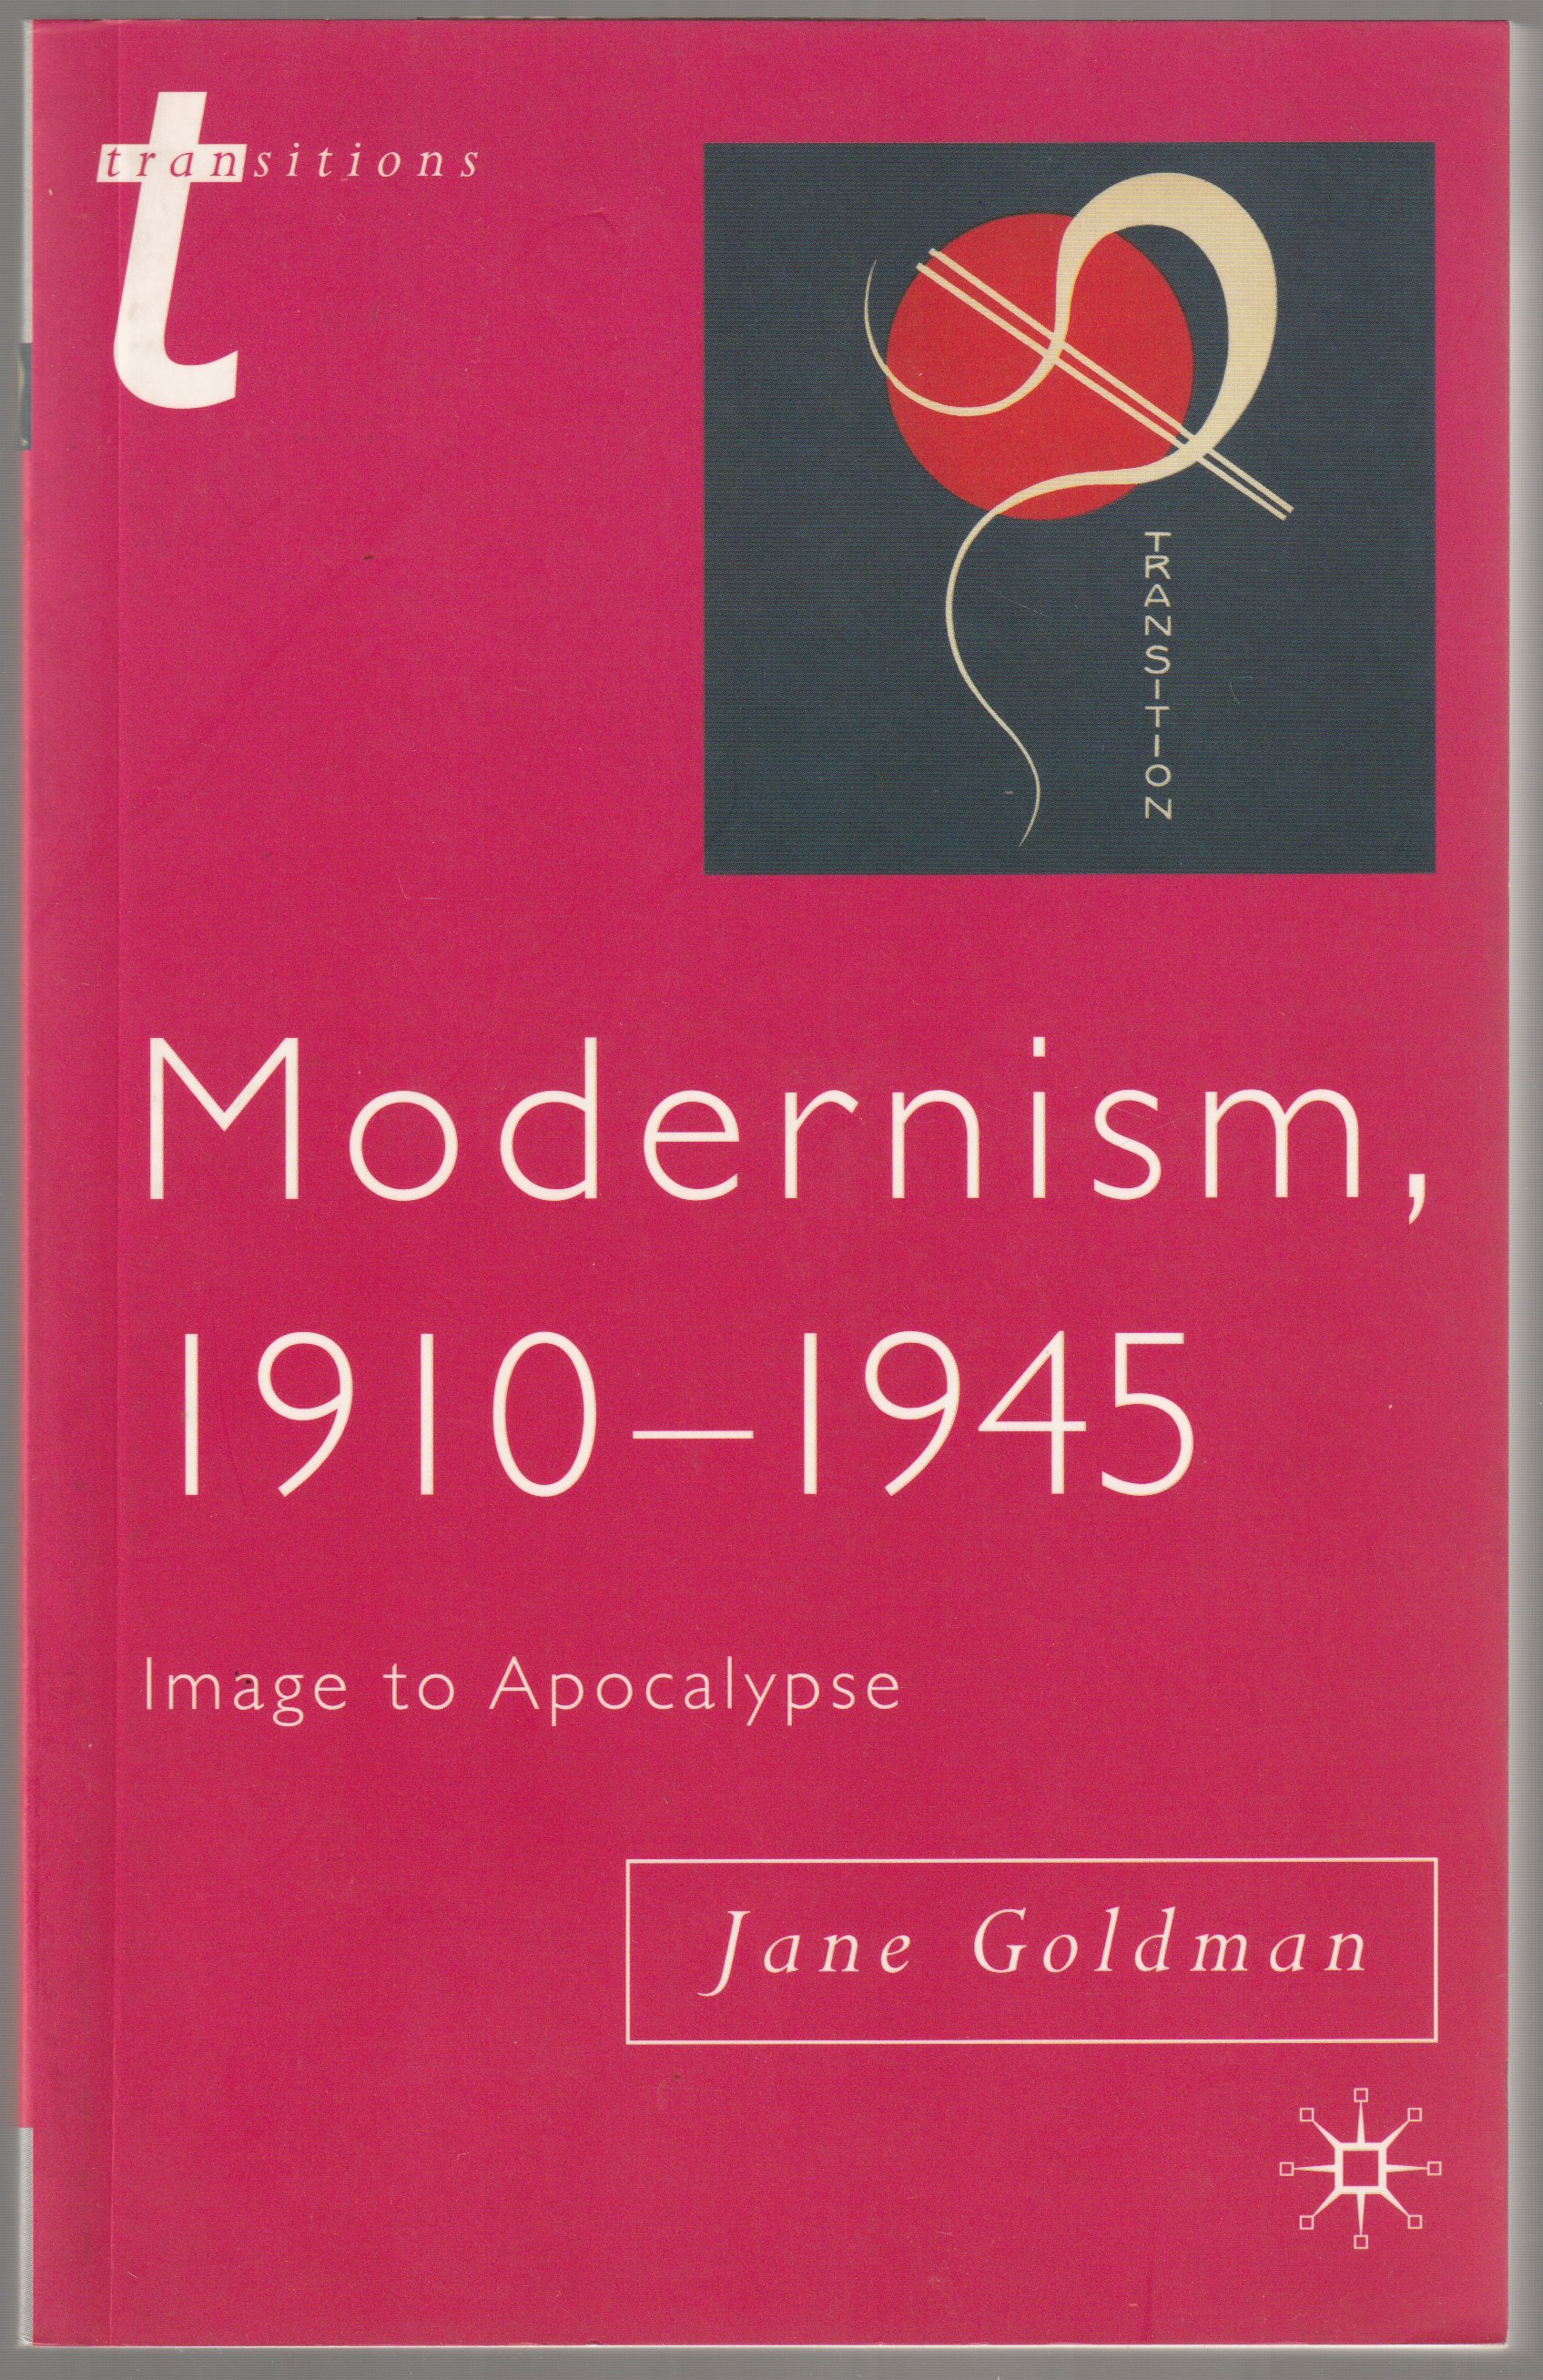 Modernism, 1910-1945 : image to apocalypse